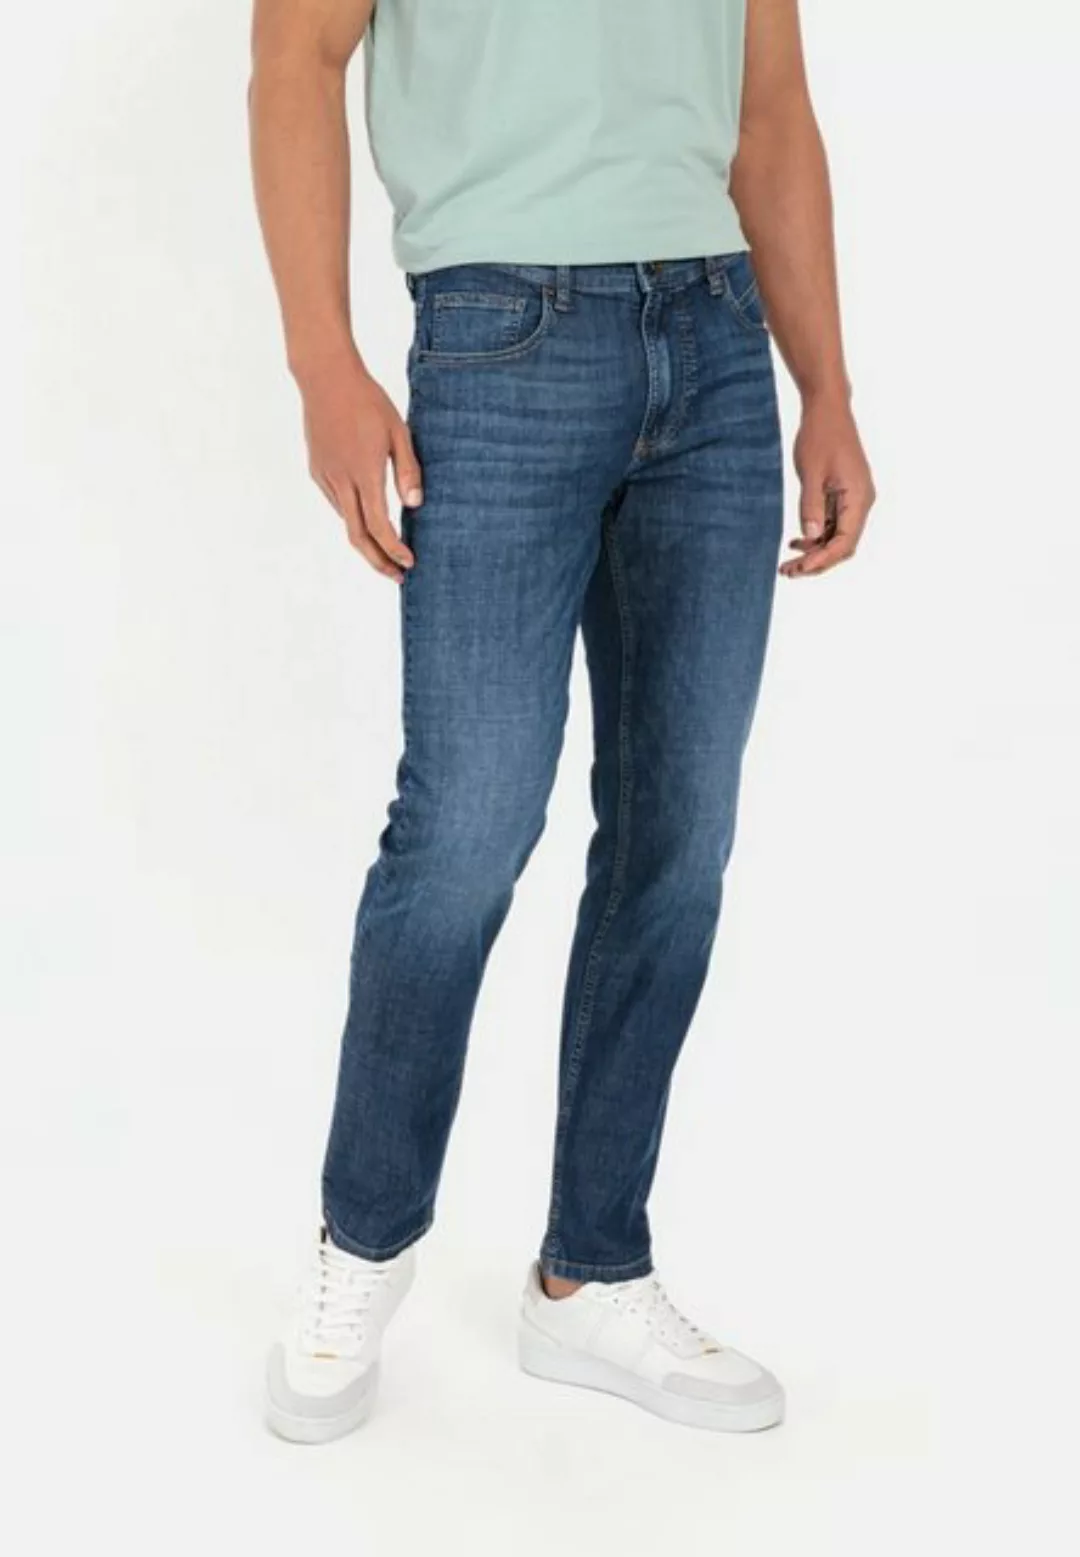 camel active 5-Pocket-Jeans mit washed Look günstig online kaufen